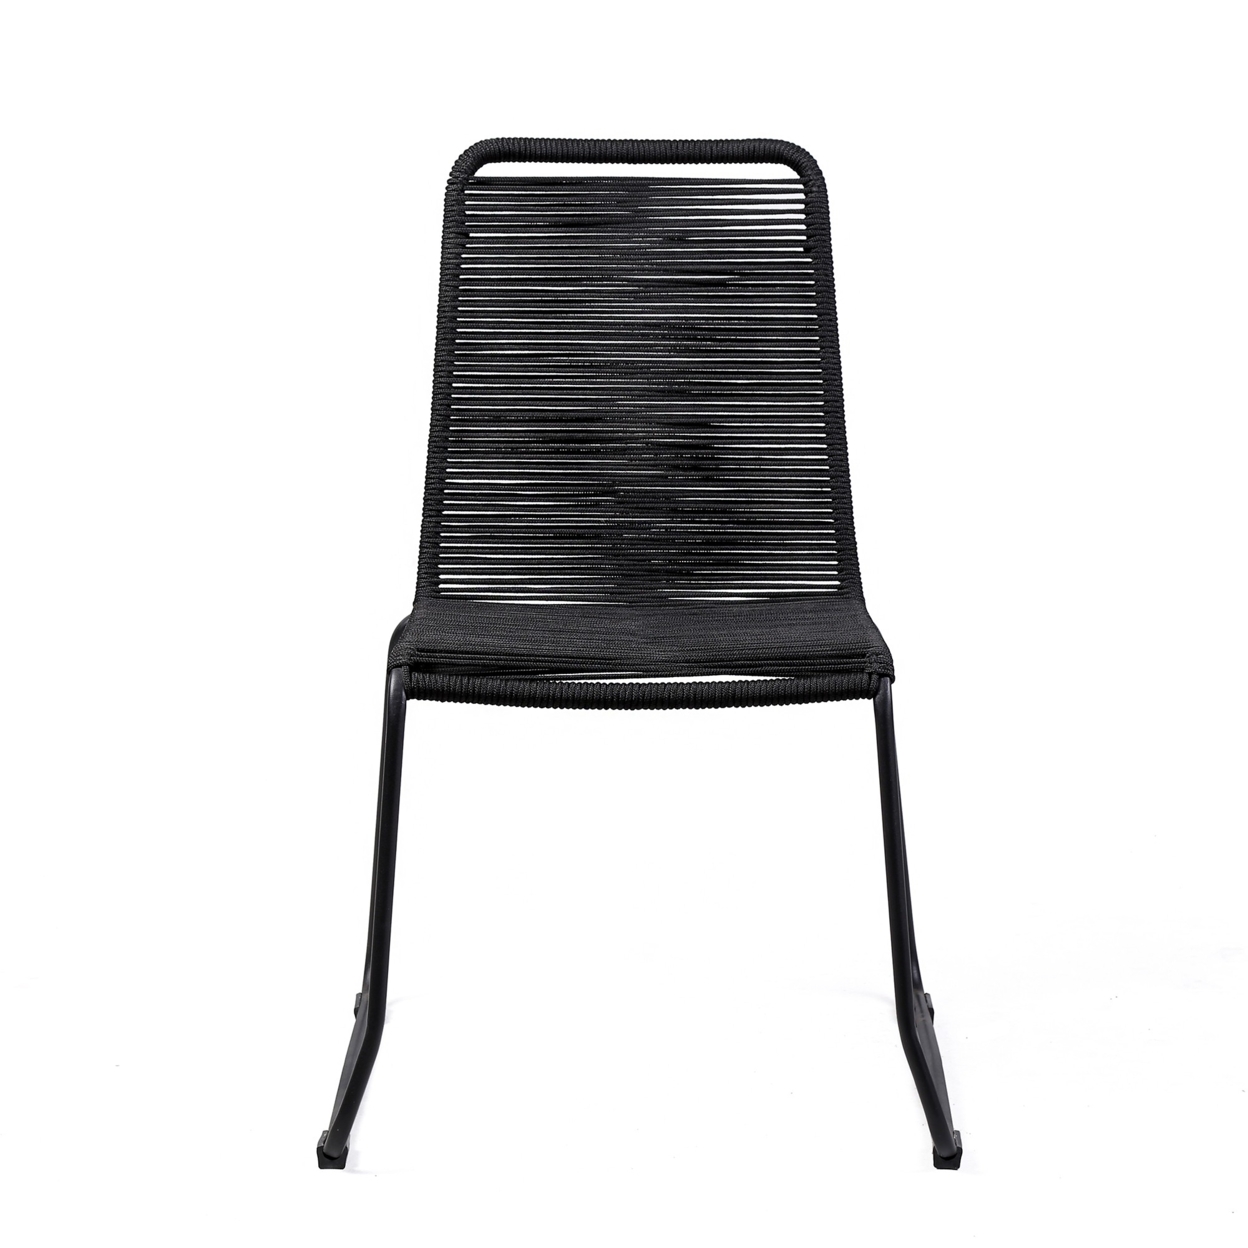 Metal Outdoor Dining Chair With Fishbone Weave, Set Of 2, Black- Saltoro Sherpi